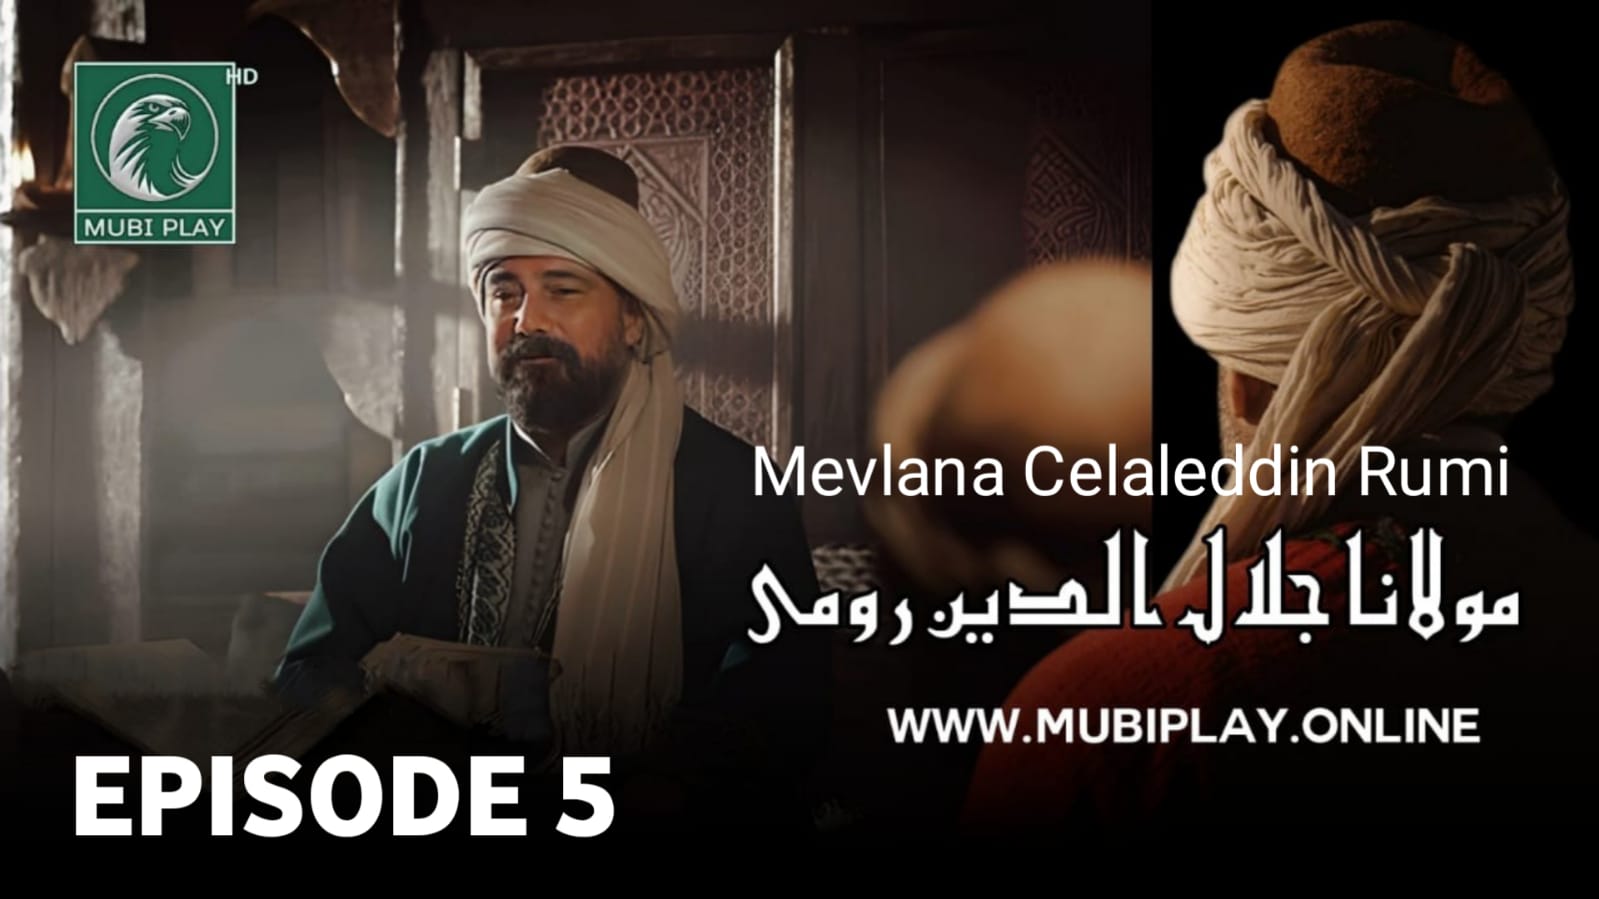 Mevlana Celaleddin Rumi Episode 5 with Urdu & English Subtitles by MubiPlay